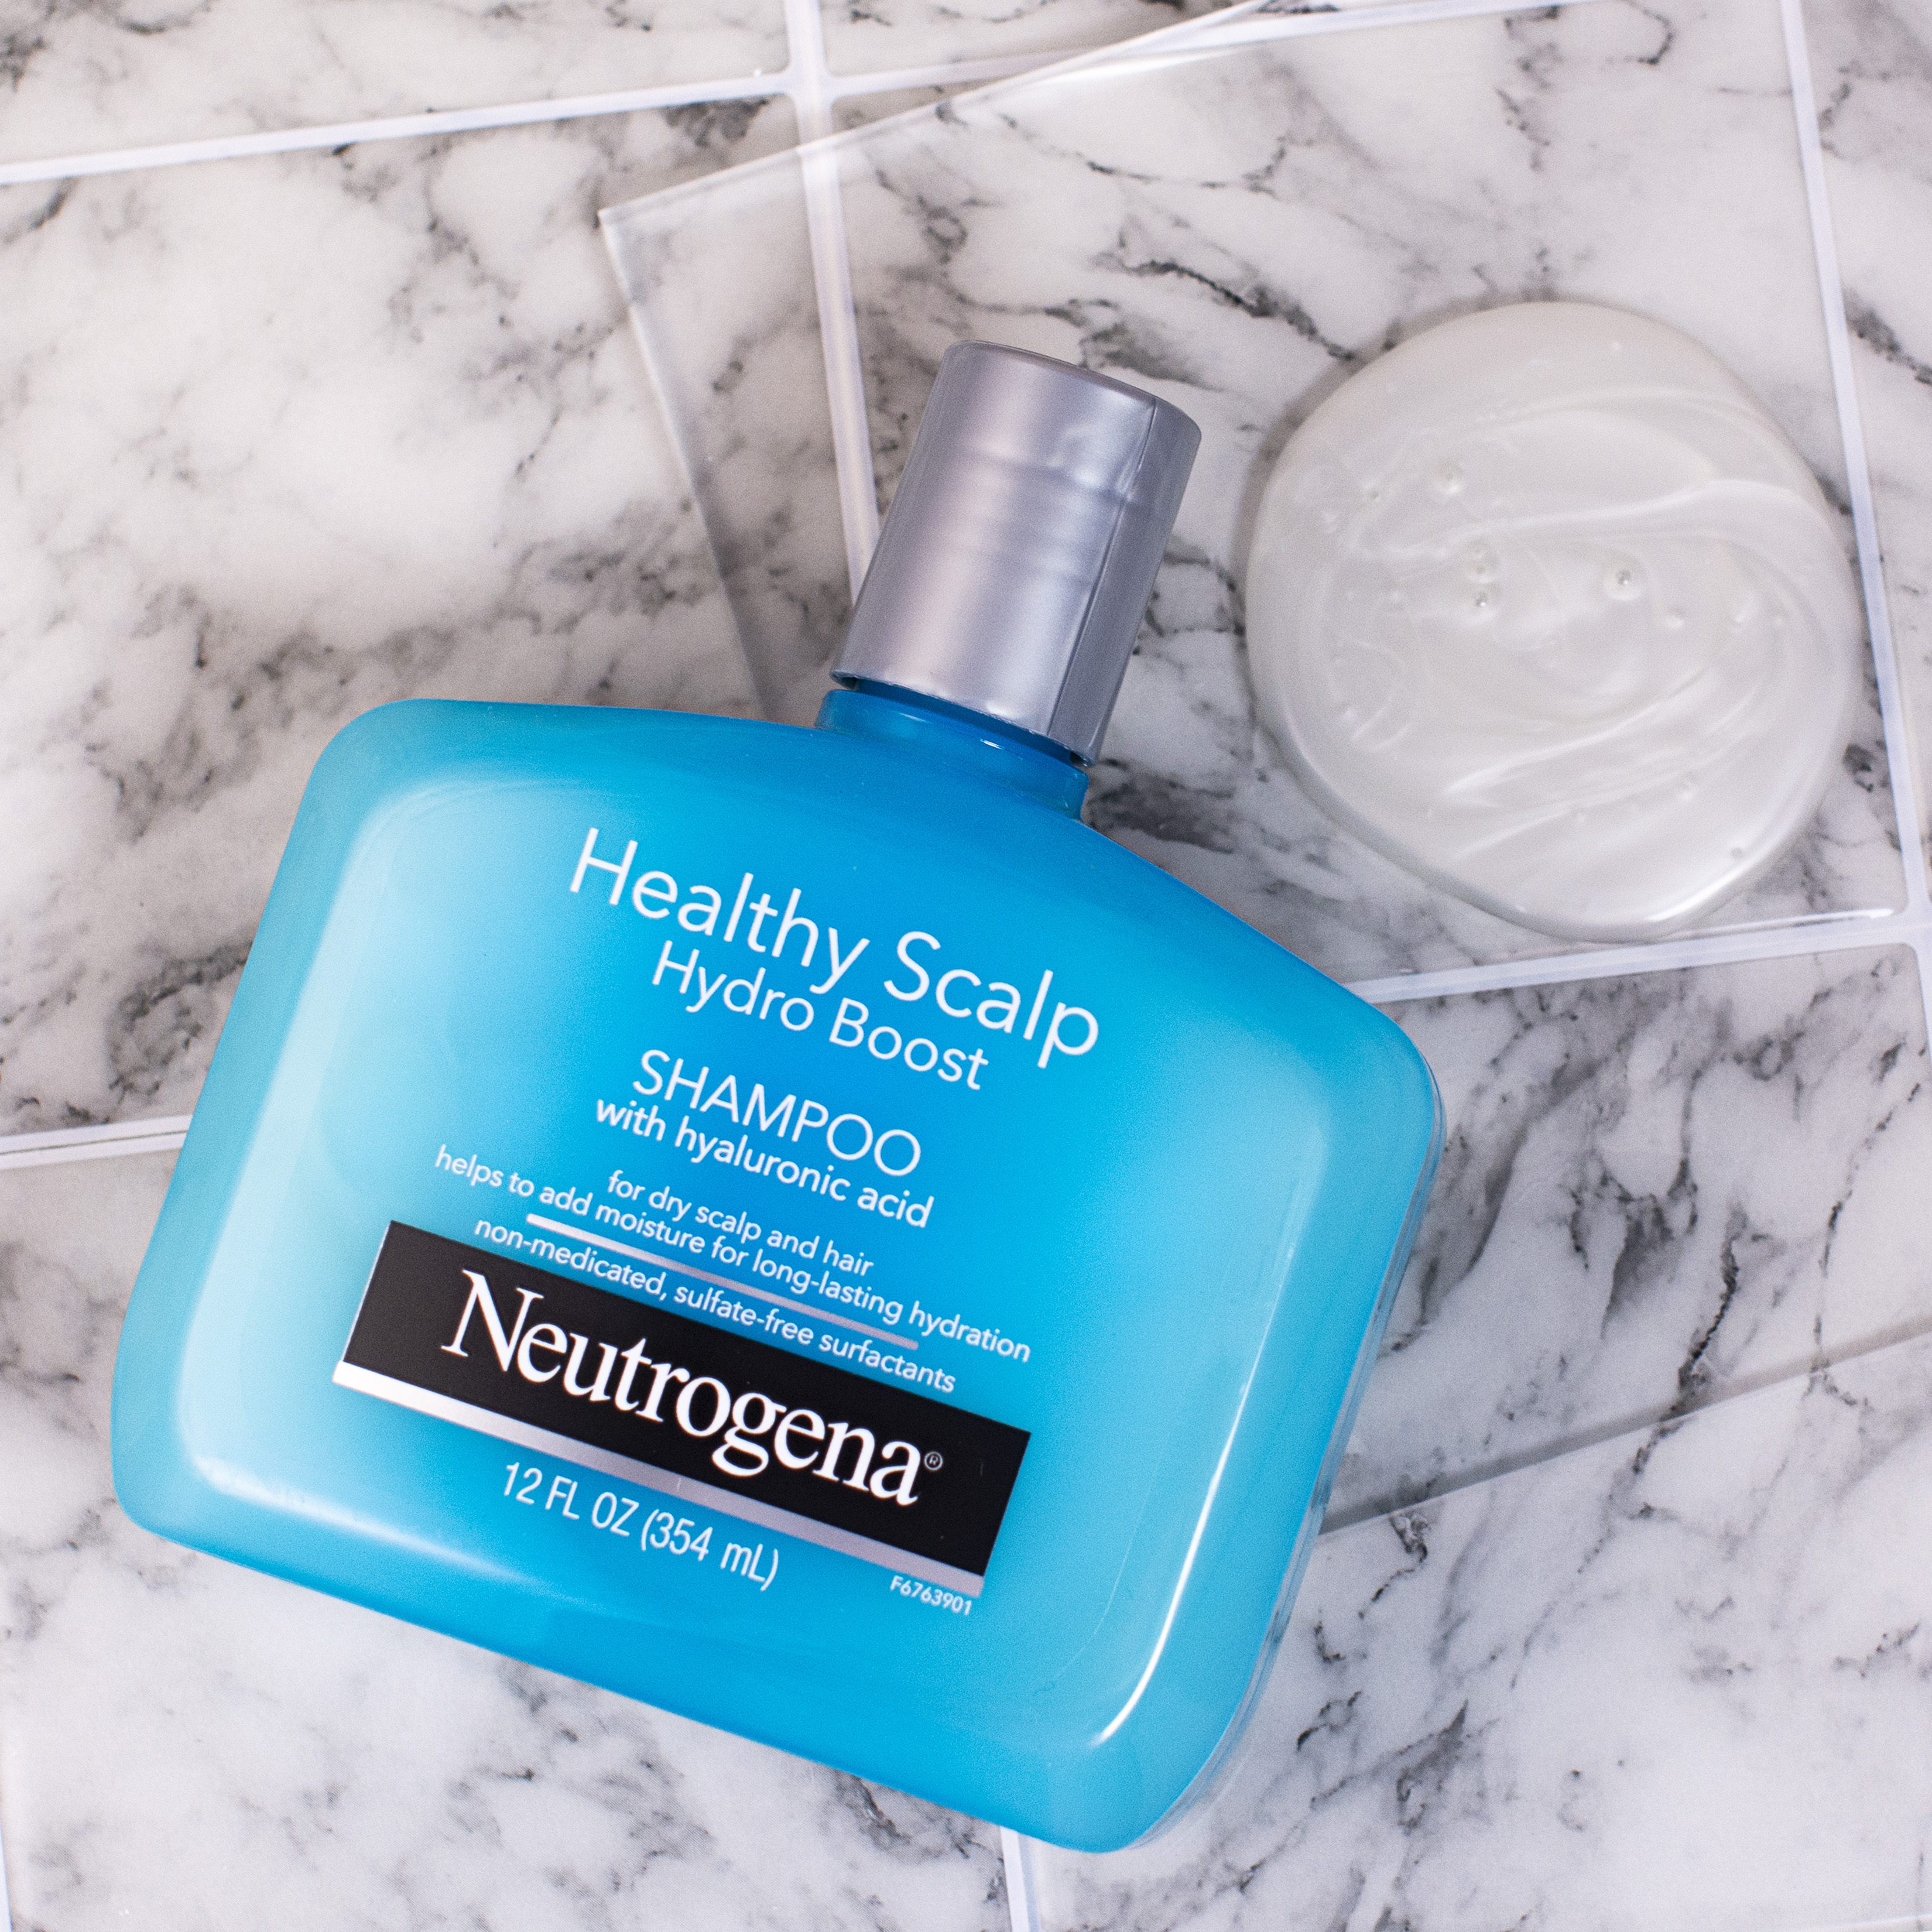 Neutrogena Hydrating Shampoo for Dry Scalp & Hair with Hyaluronic Acid, 12 fl oz - image 3 of 12